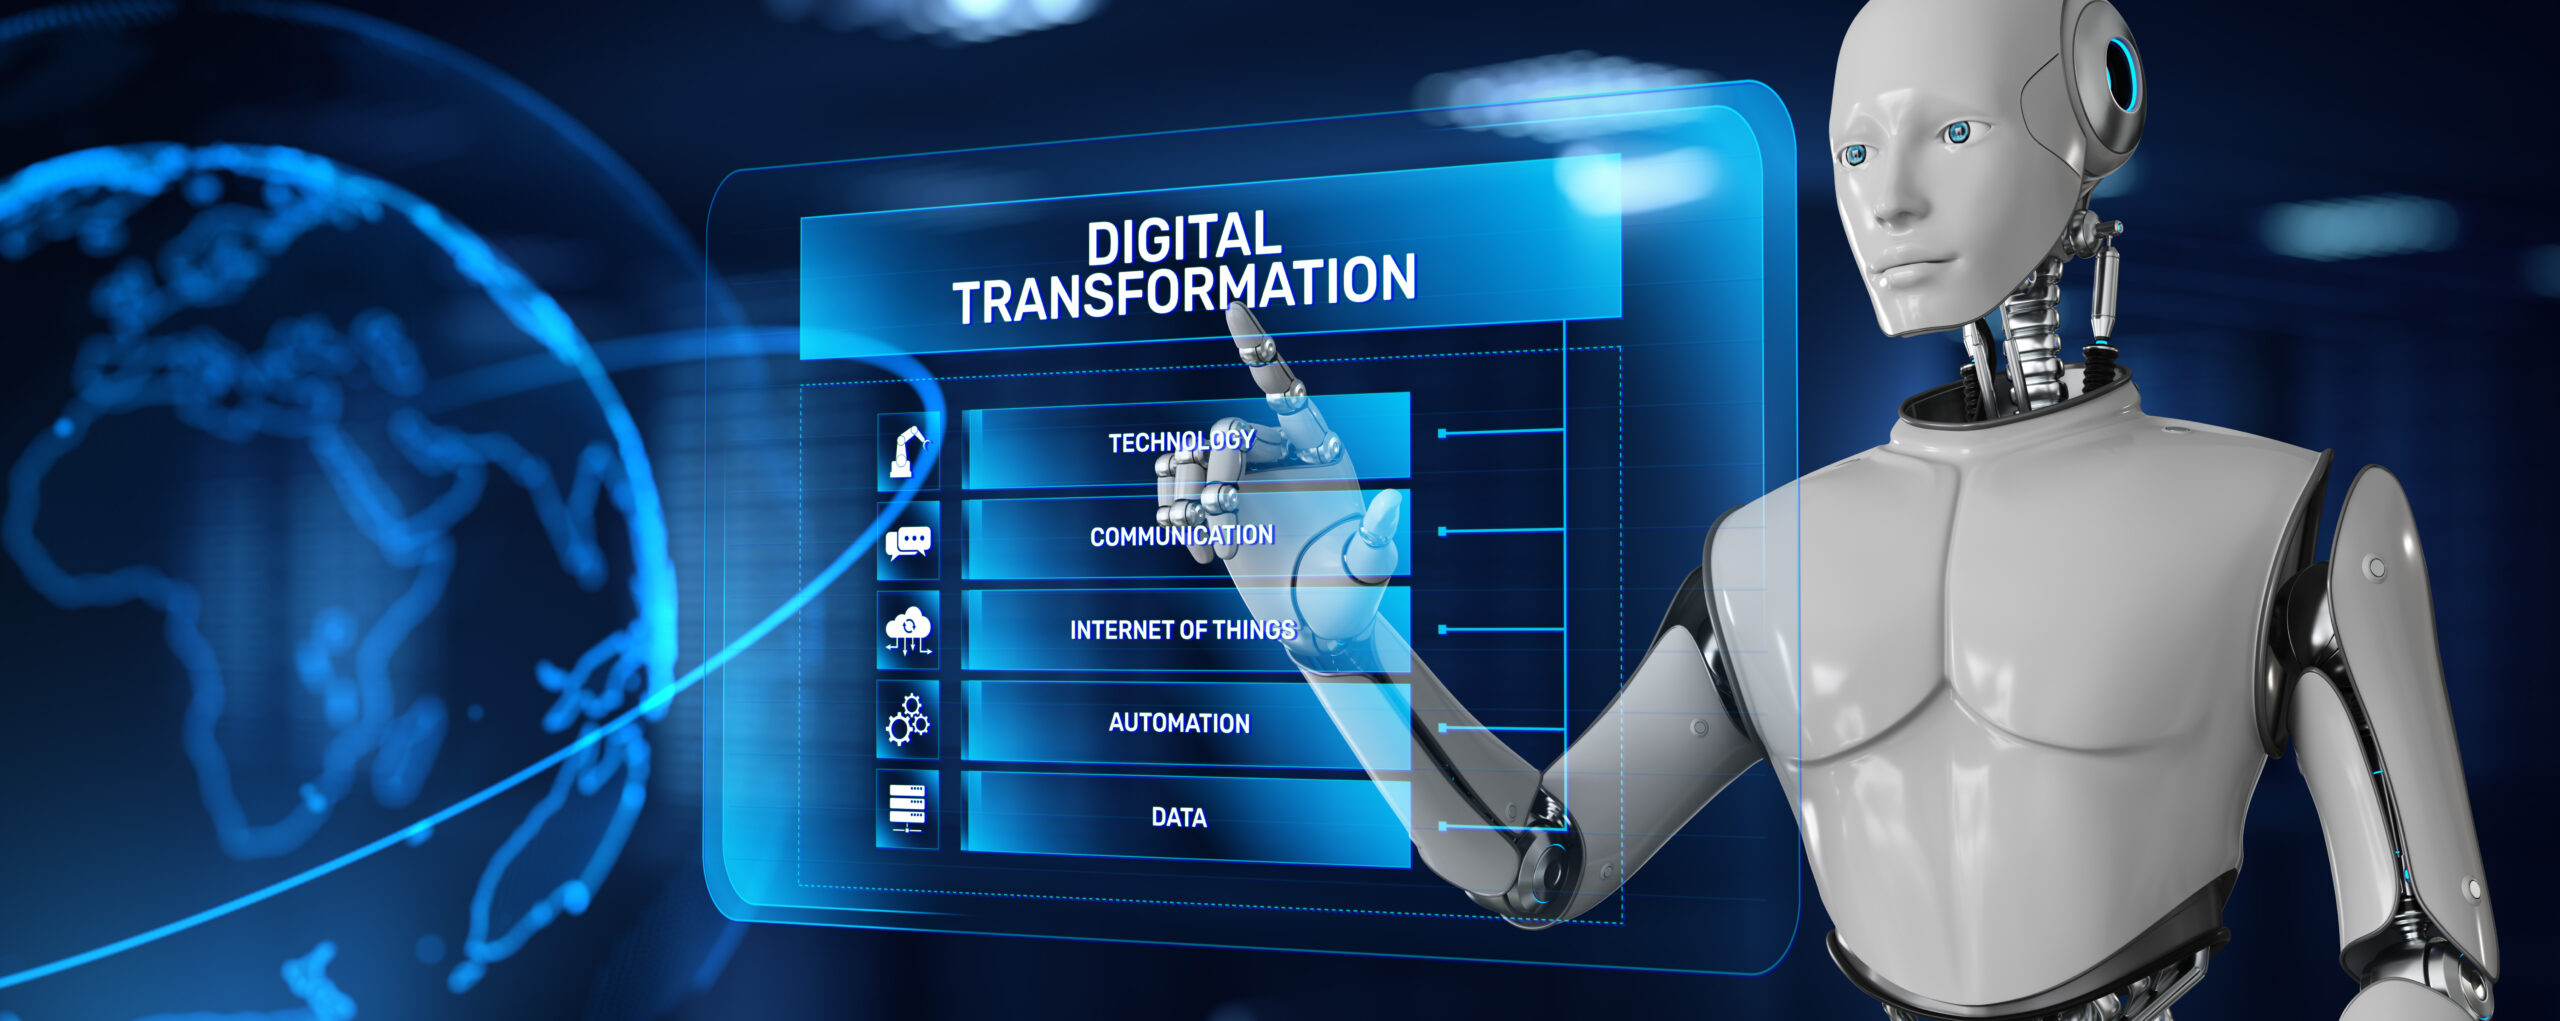 Digital transformation disruption digitalisation technology concept. Robot pressing button on screen 3d render.